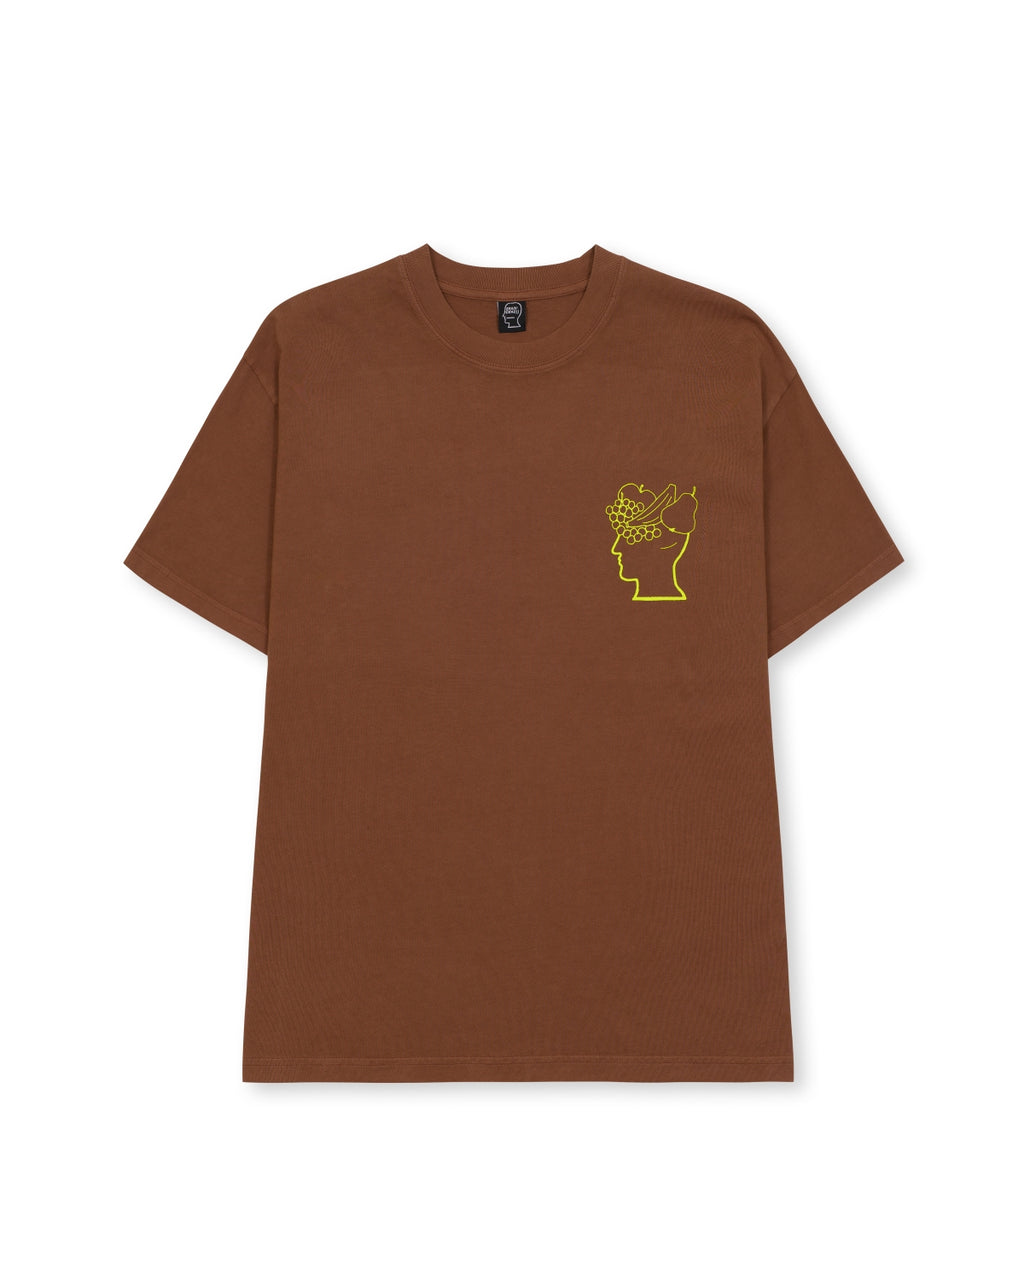 Fruitful Companion T-Shirt - Light Brown